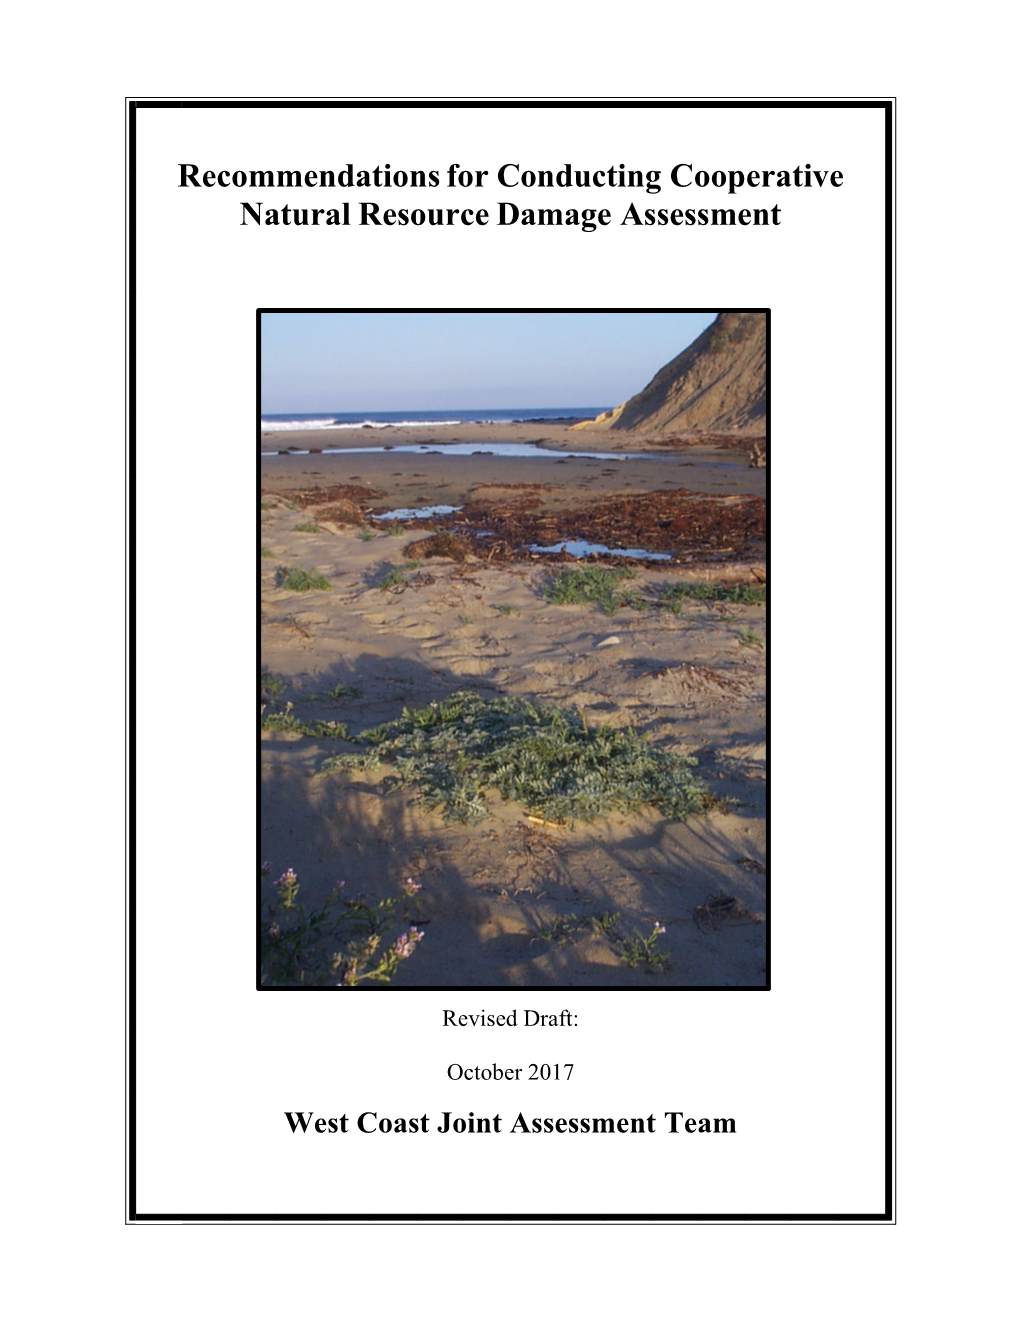 Natural Resource Damage Assessment and Restoration